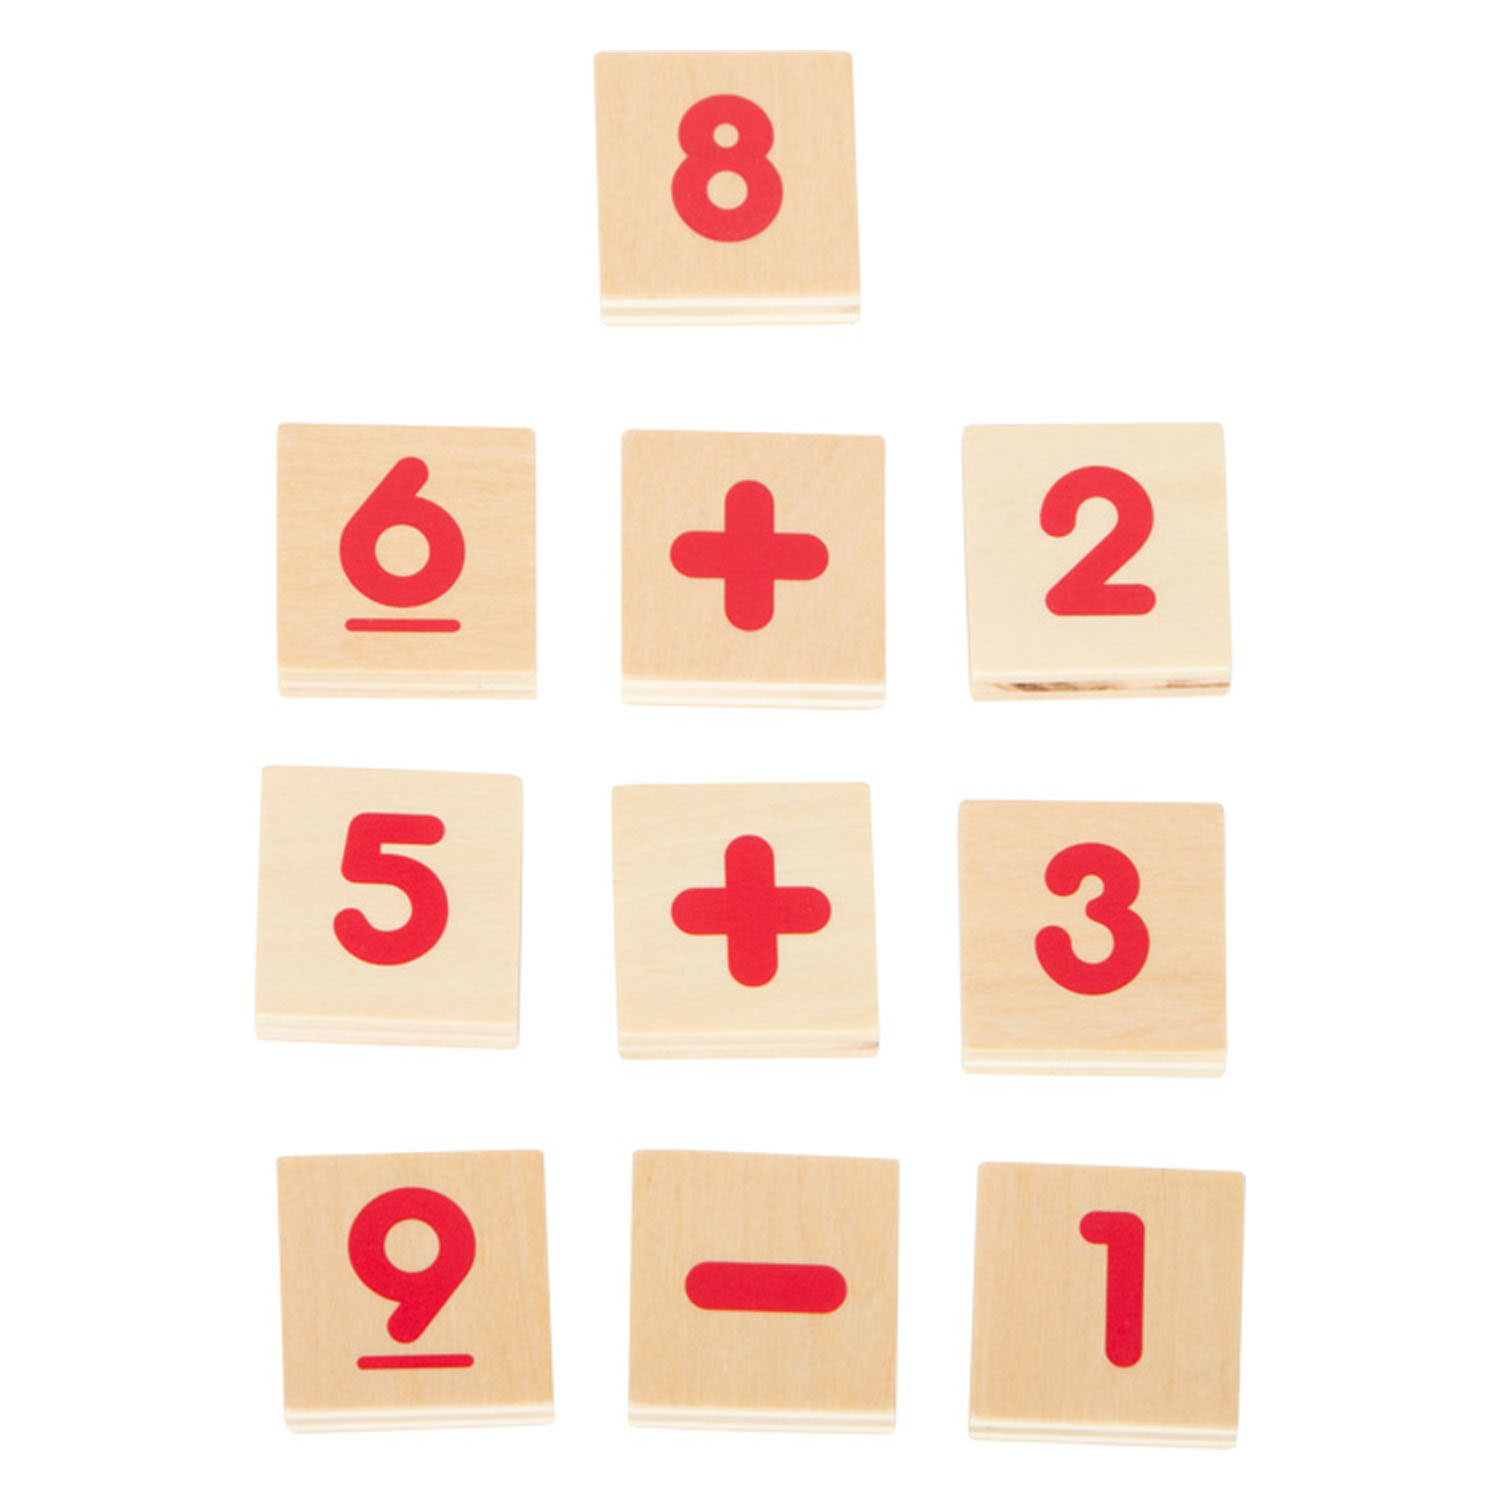 Small Foot - Holz-Lernspiel Basic Mathe